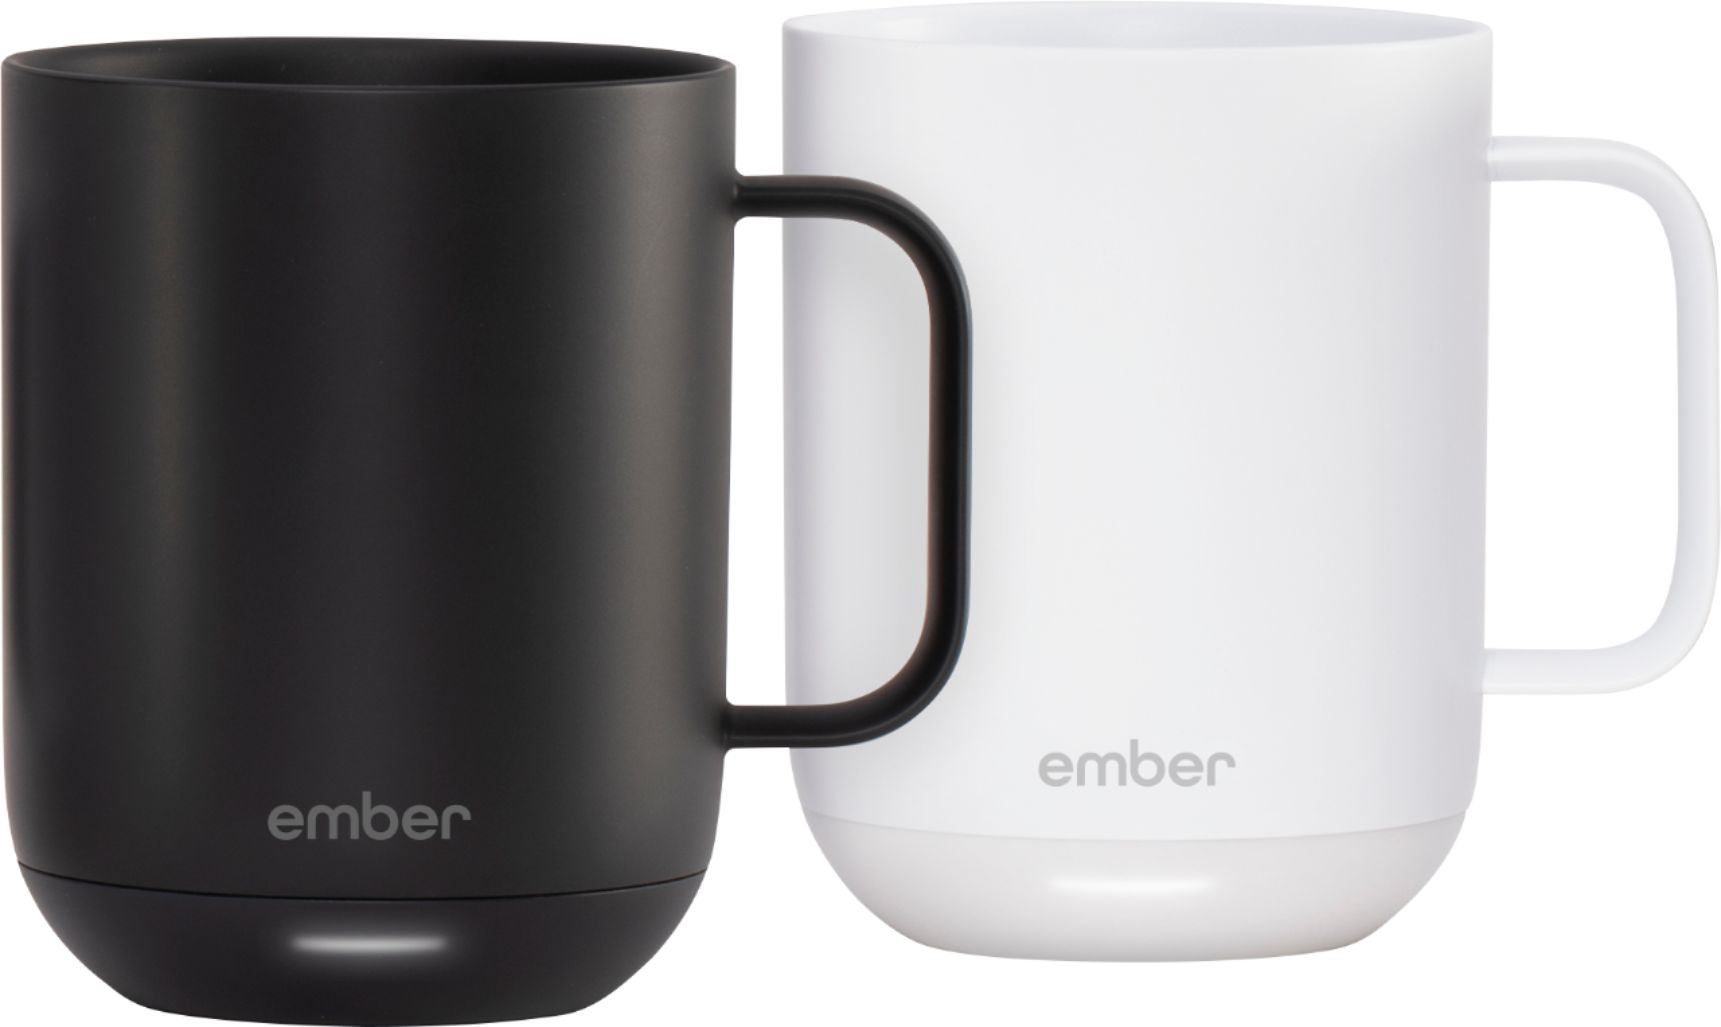 Ember 10 Oz Temperature Control White Smart Mug NEW Sealed in Box